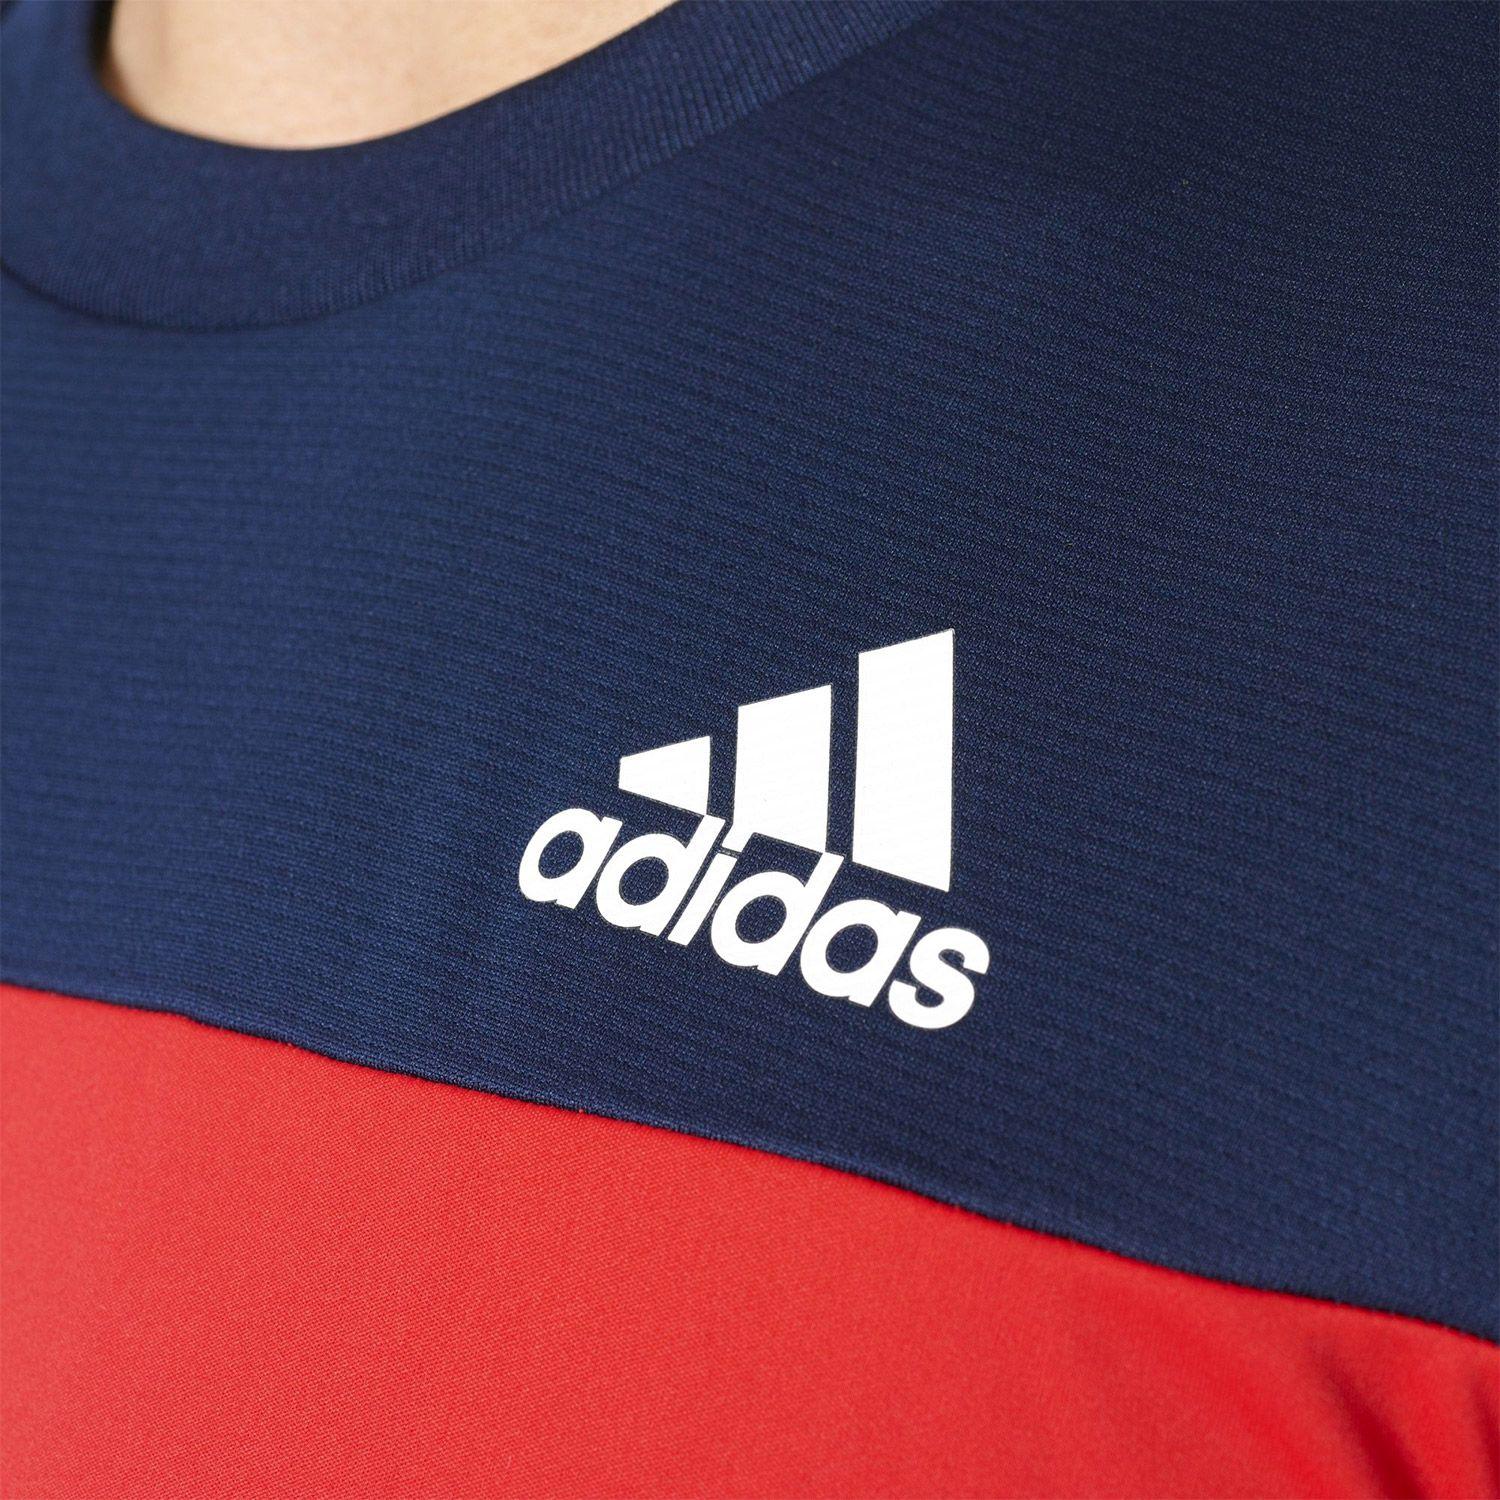 Blue and Red Adidas Logo - Adidas Club Men's Tennis T-Shirt - Red/Navy